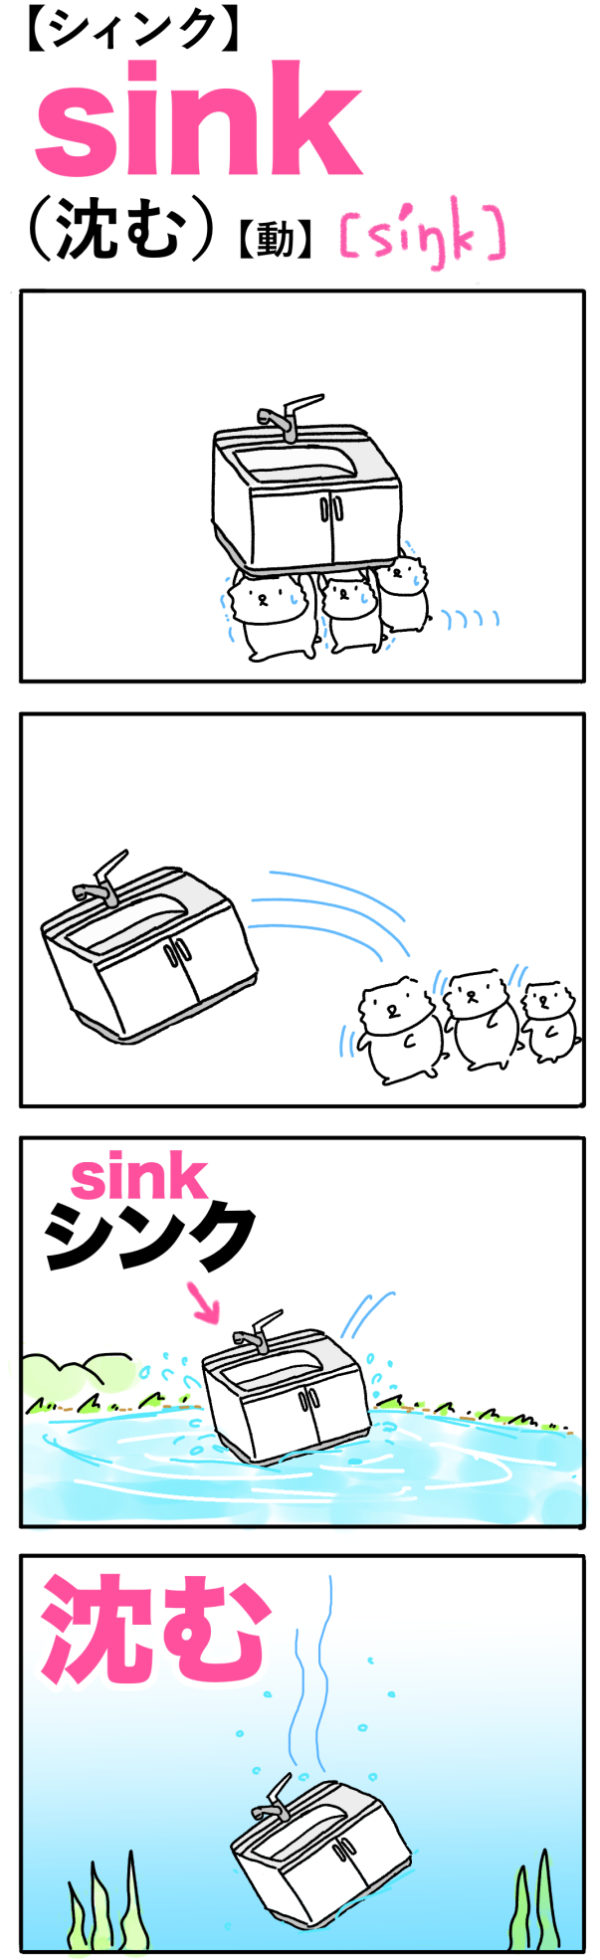 sink（沈む）の語呂合わせ英単語